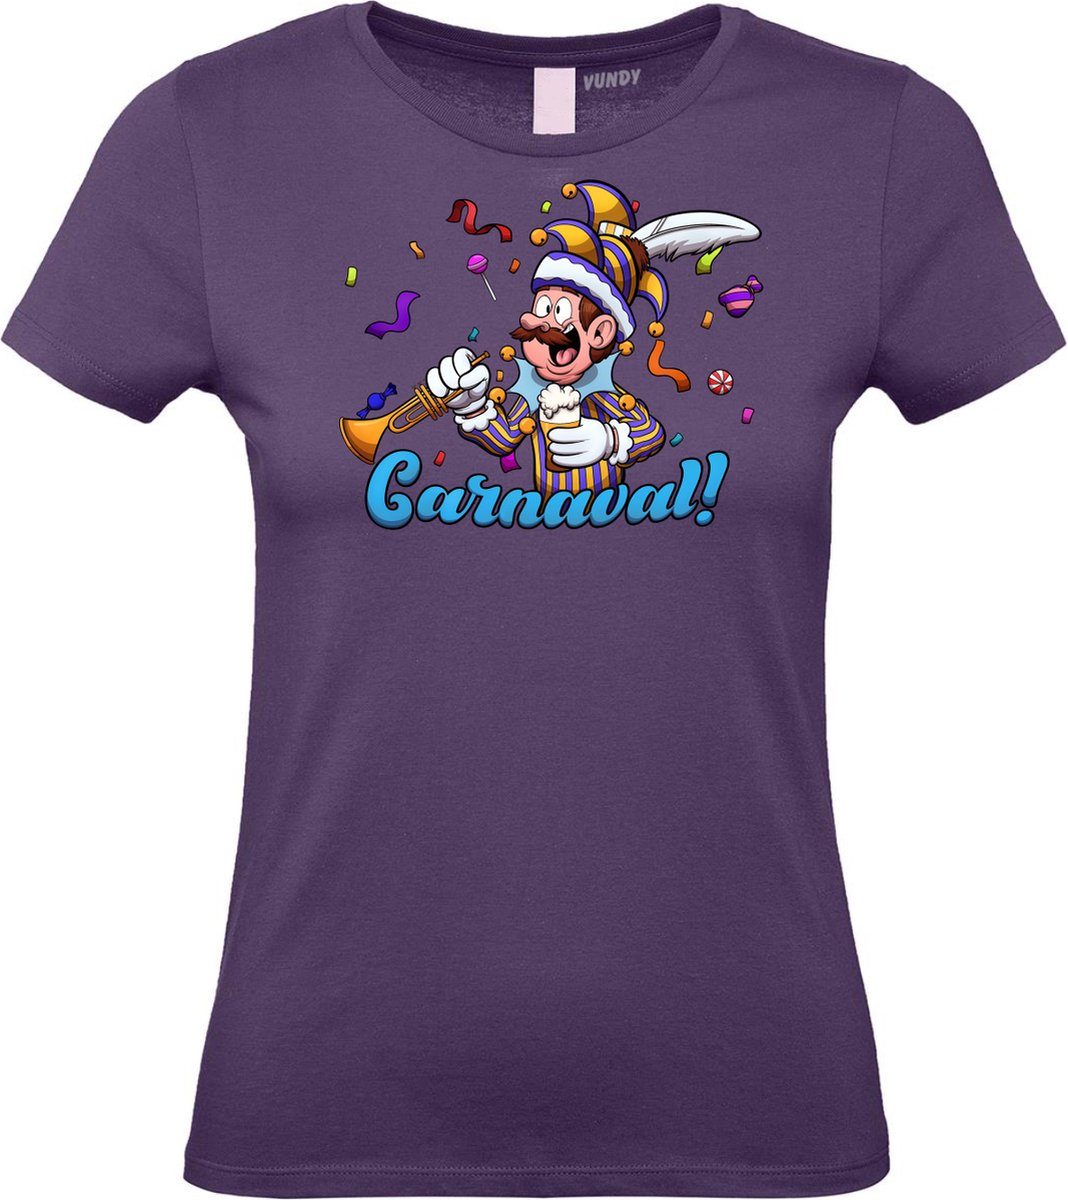 Dames T-shirt Carnavalluh | Carnaval | Carnavalskleding Dames Heren | Paars | maat S